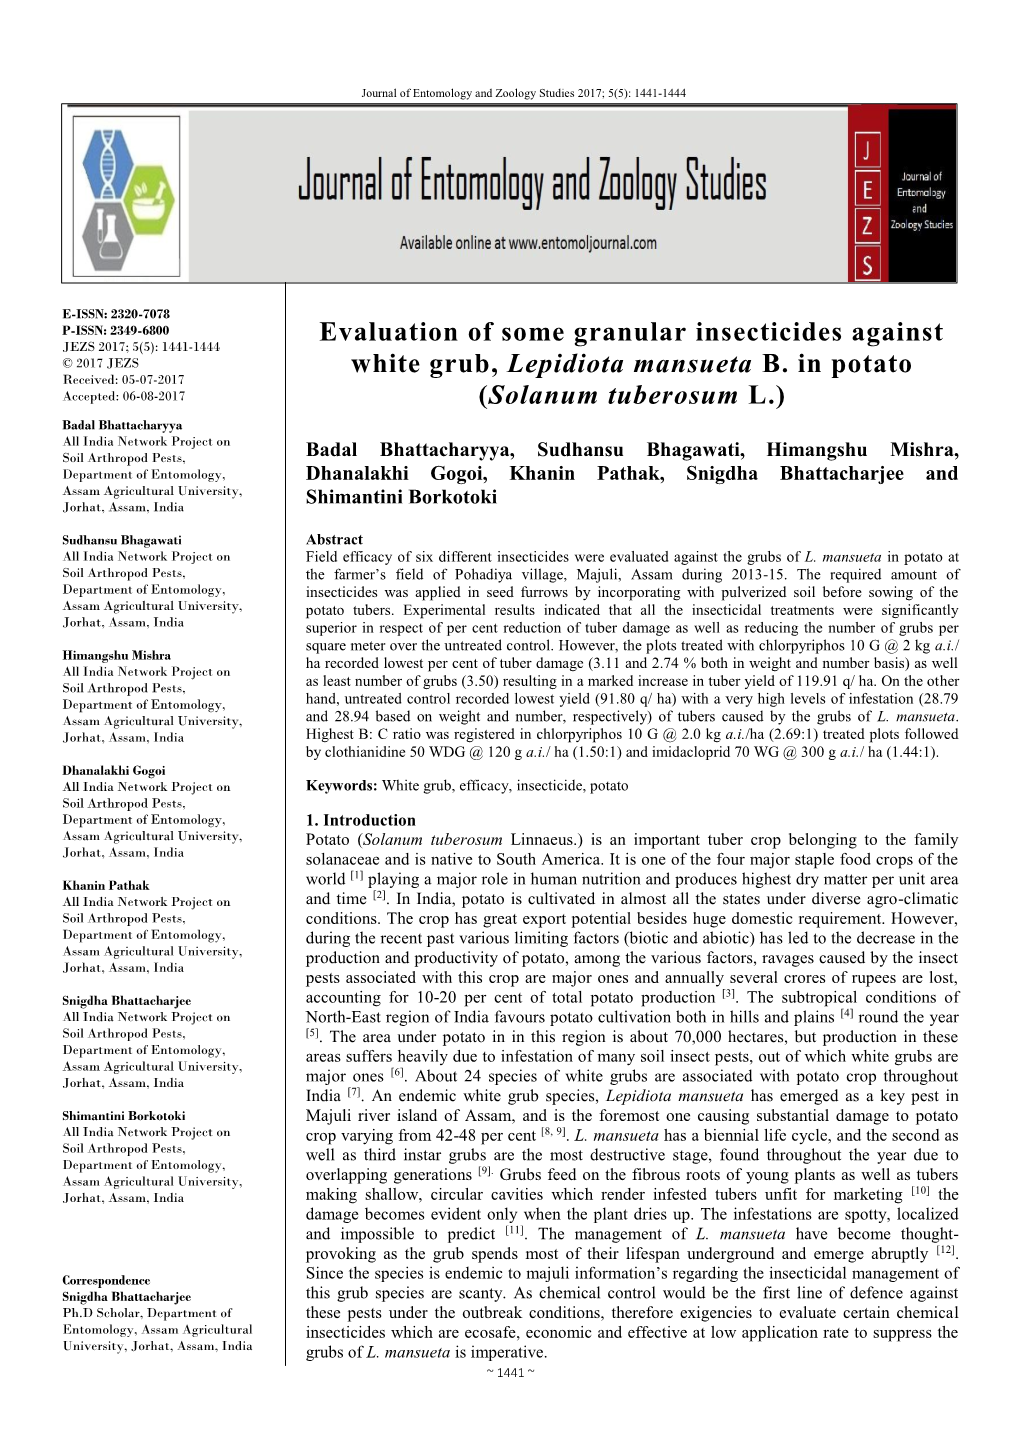 Evaluation of Some Granular Insecticides Against White Grub, Lepidiota Mansueta B. in Potato